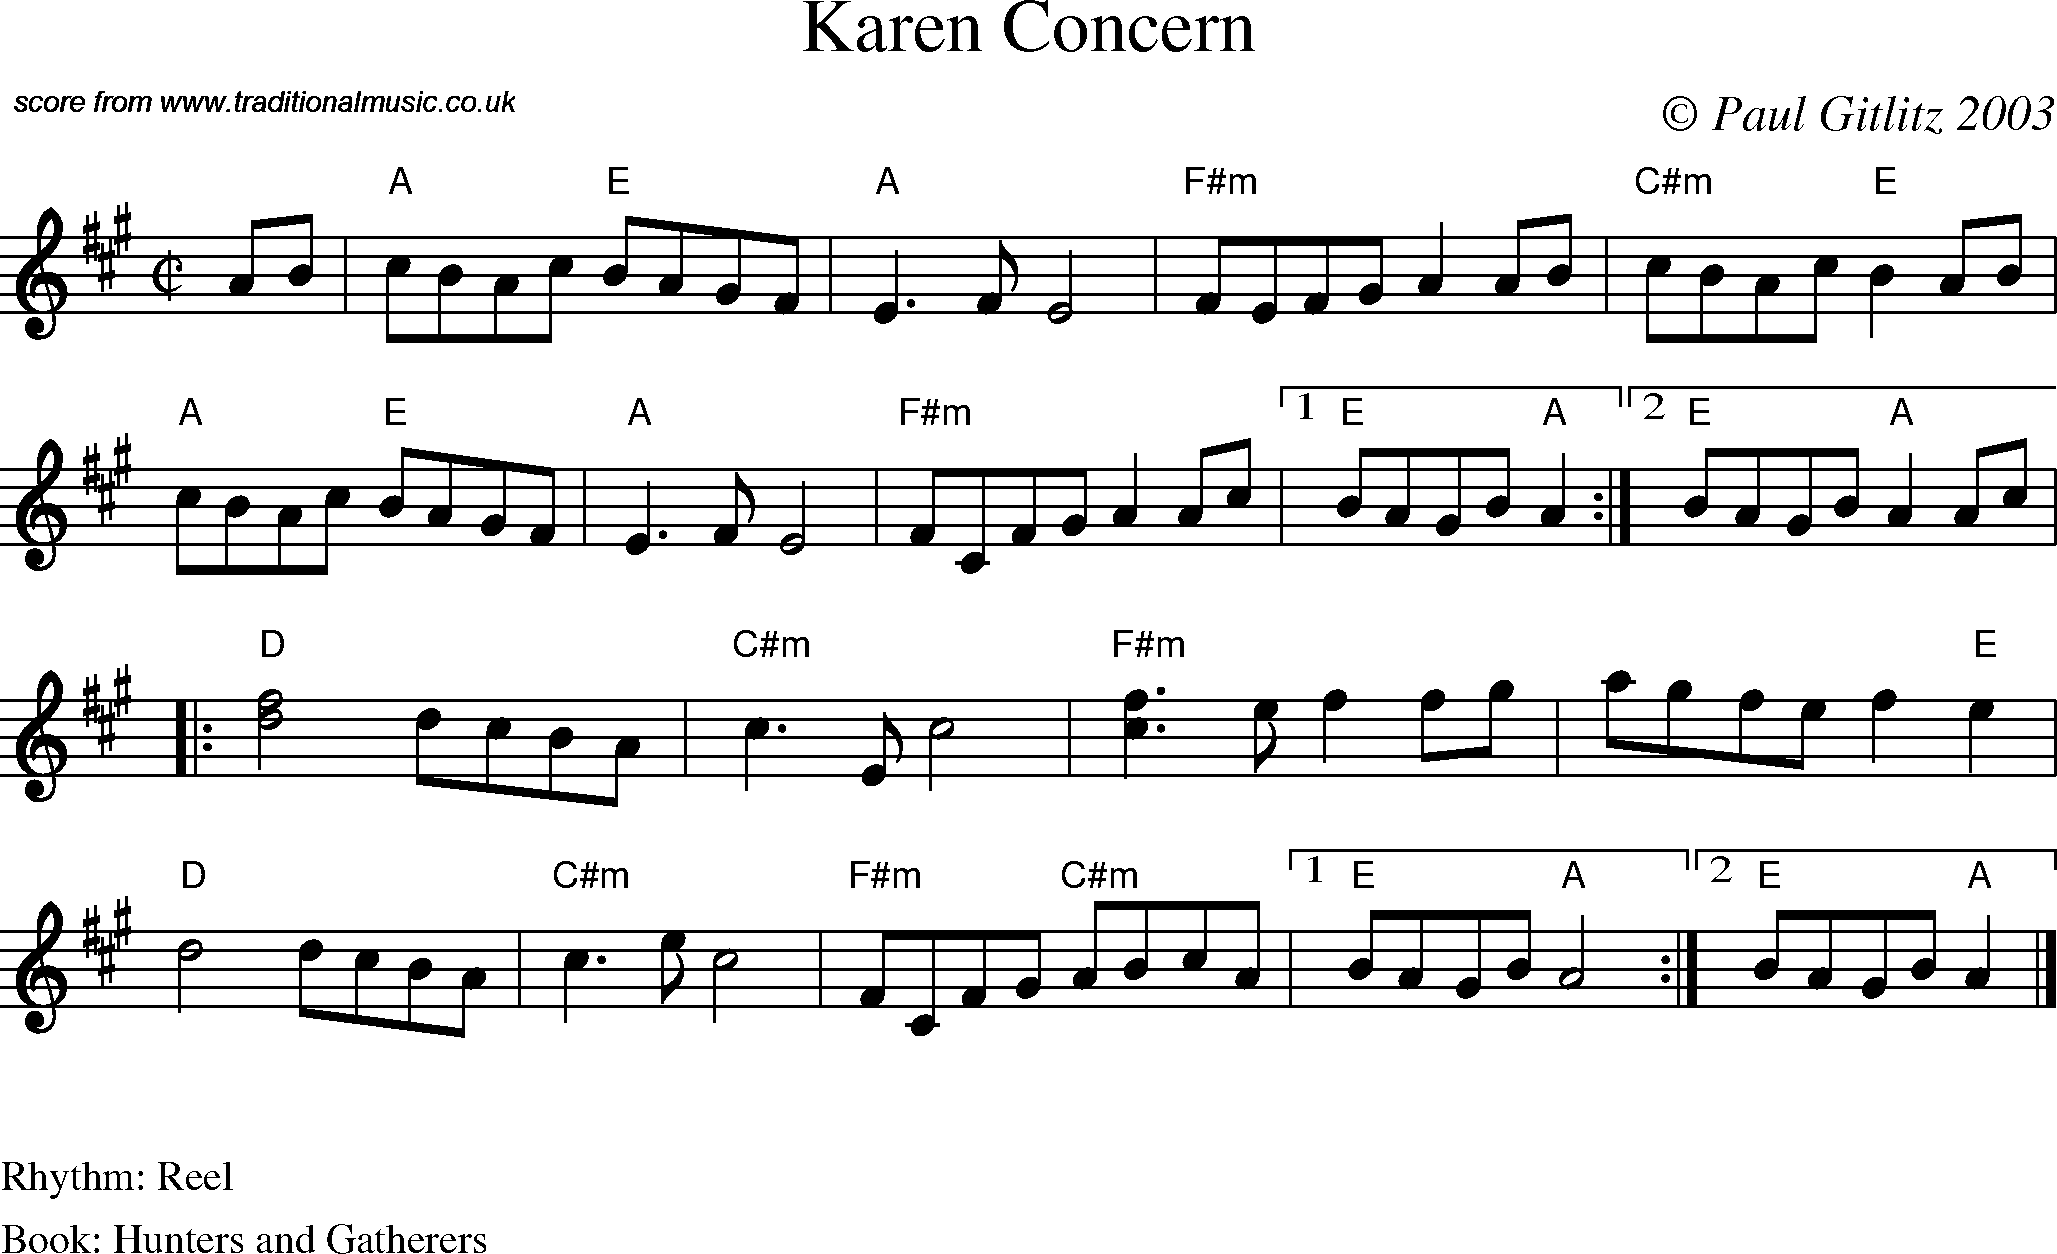 Sheet Music Score for Reel - Karen Concern